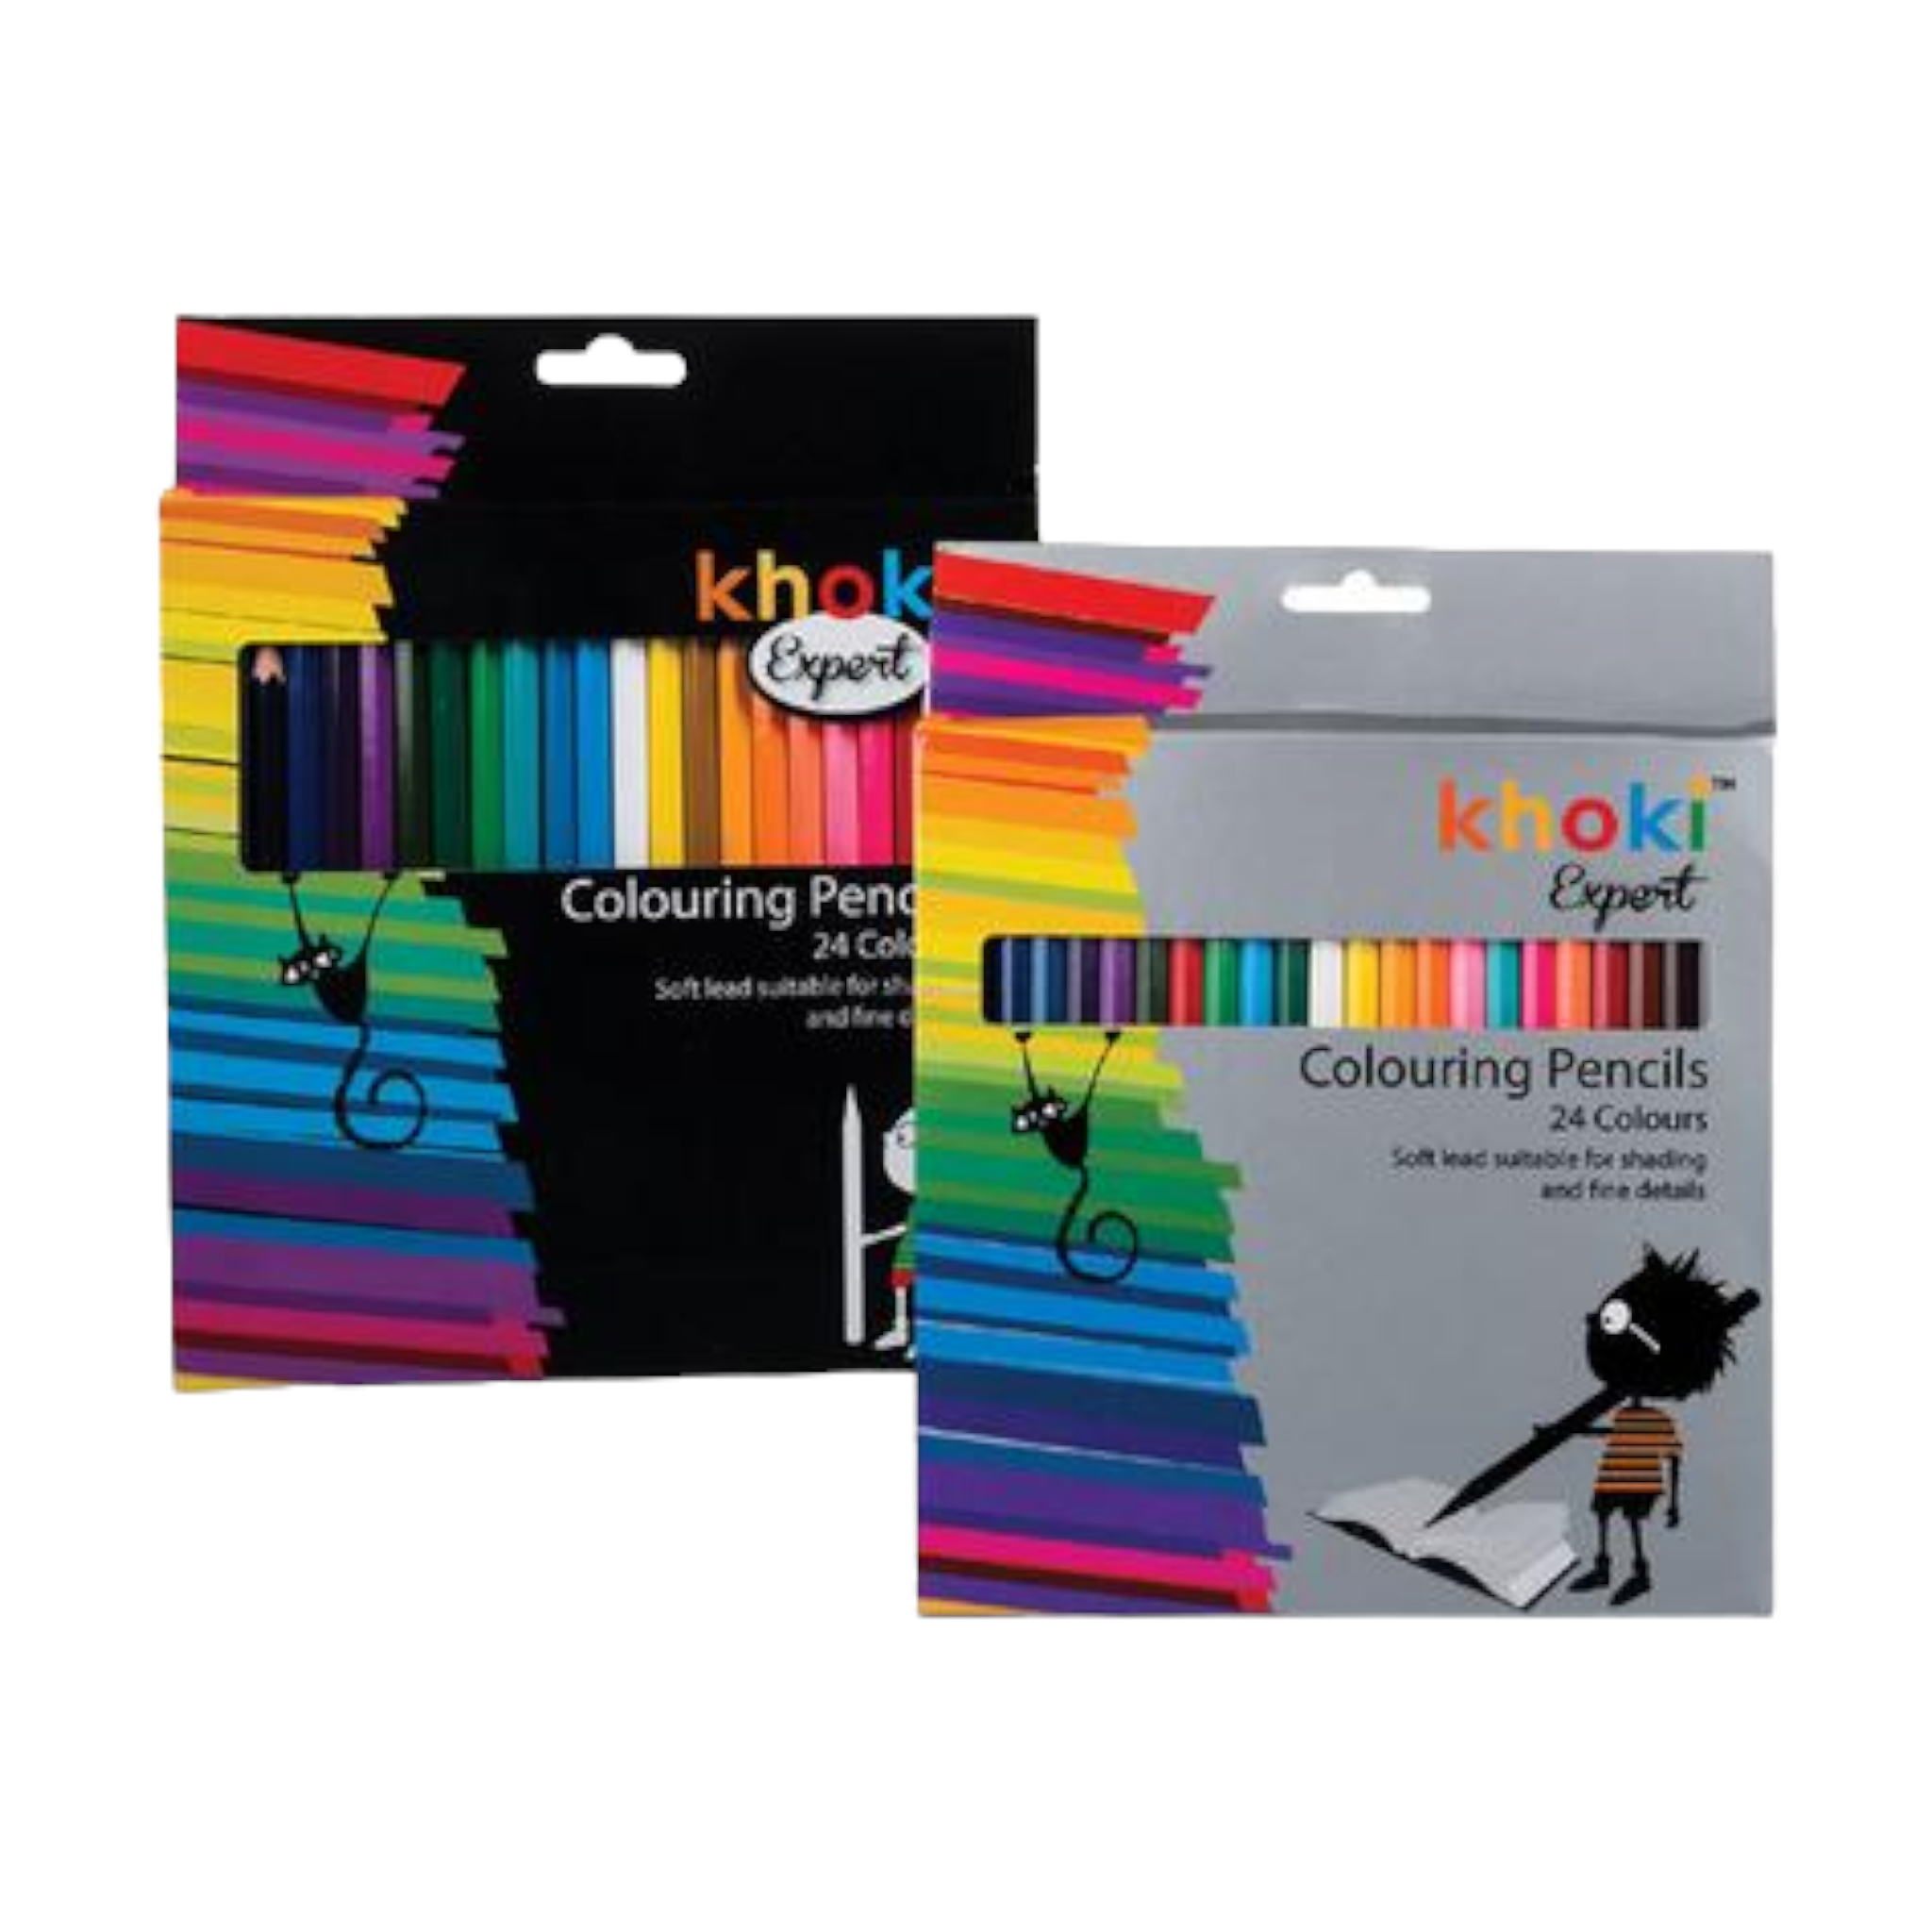 Khoki Artcraft Pencil Crayon Expert 24pcs